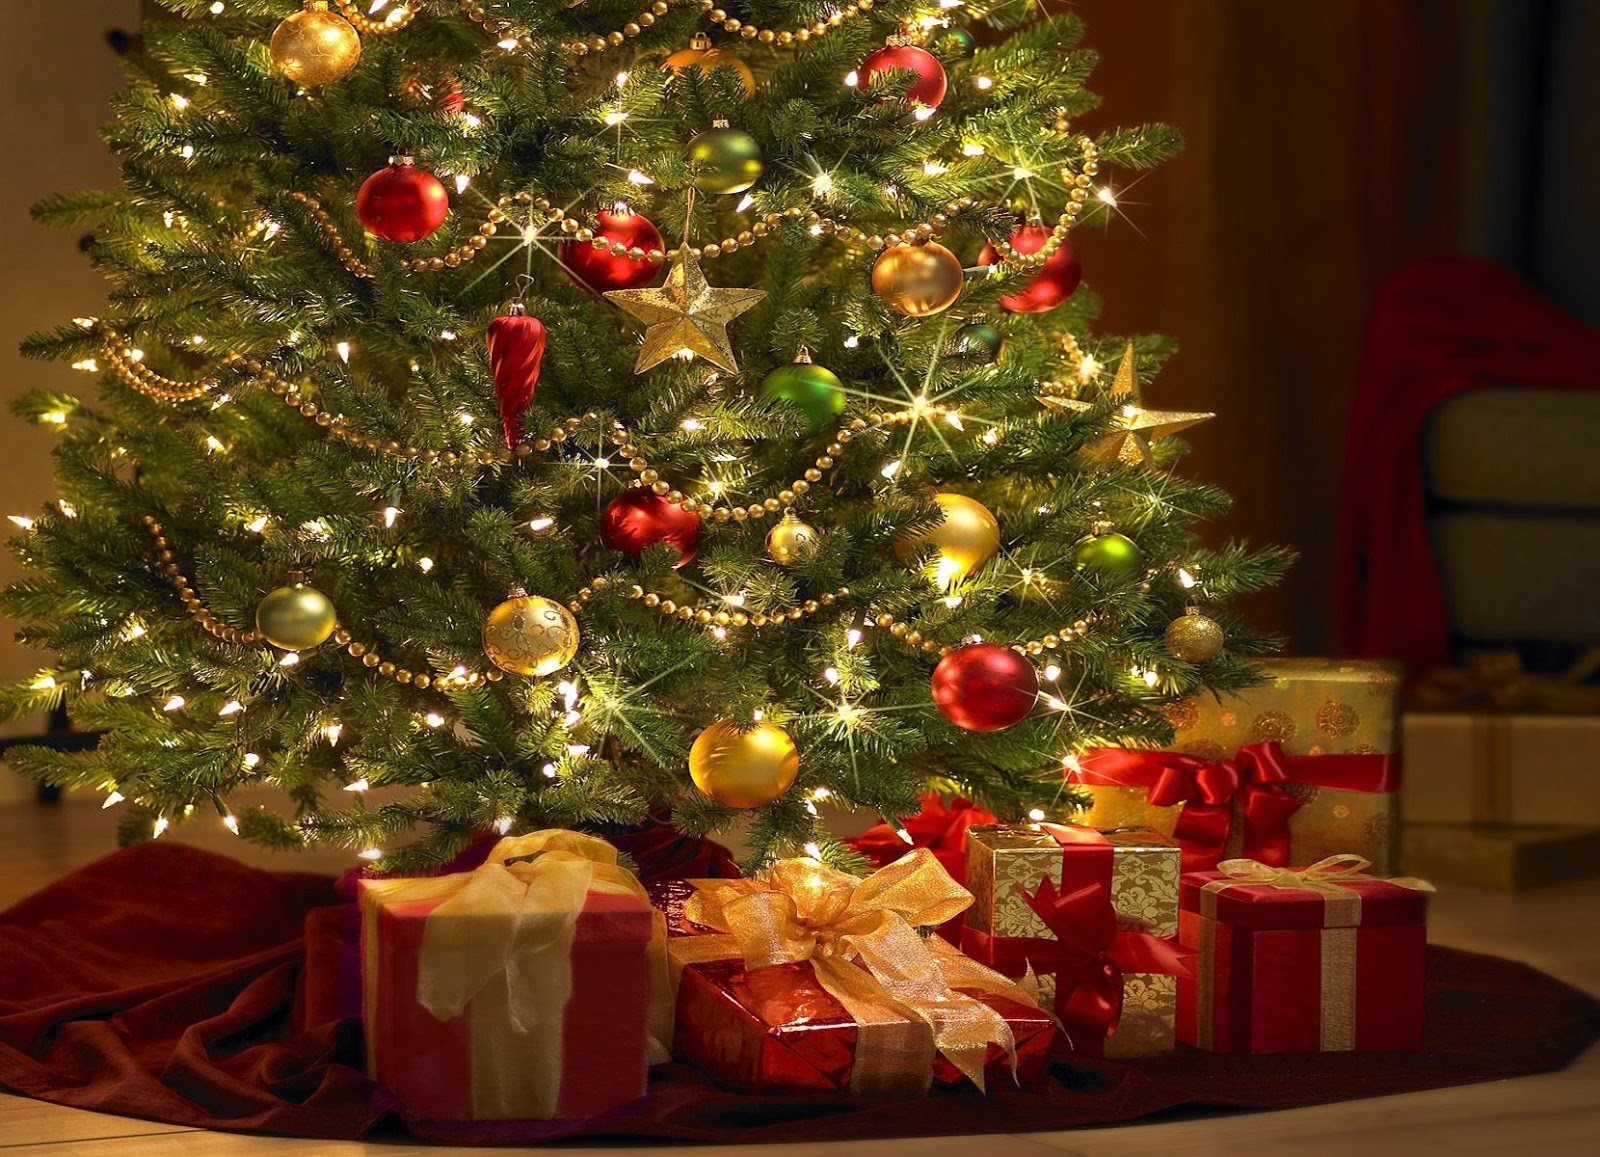 c-mo-se-dice-feliz-navidad-en-ingles-merry-christmas-youtube